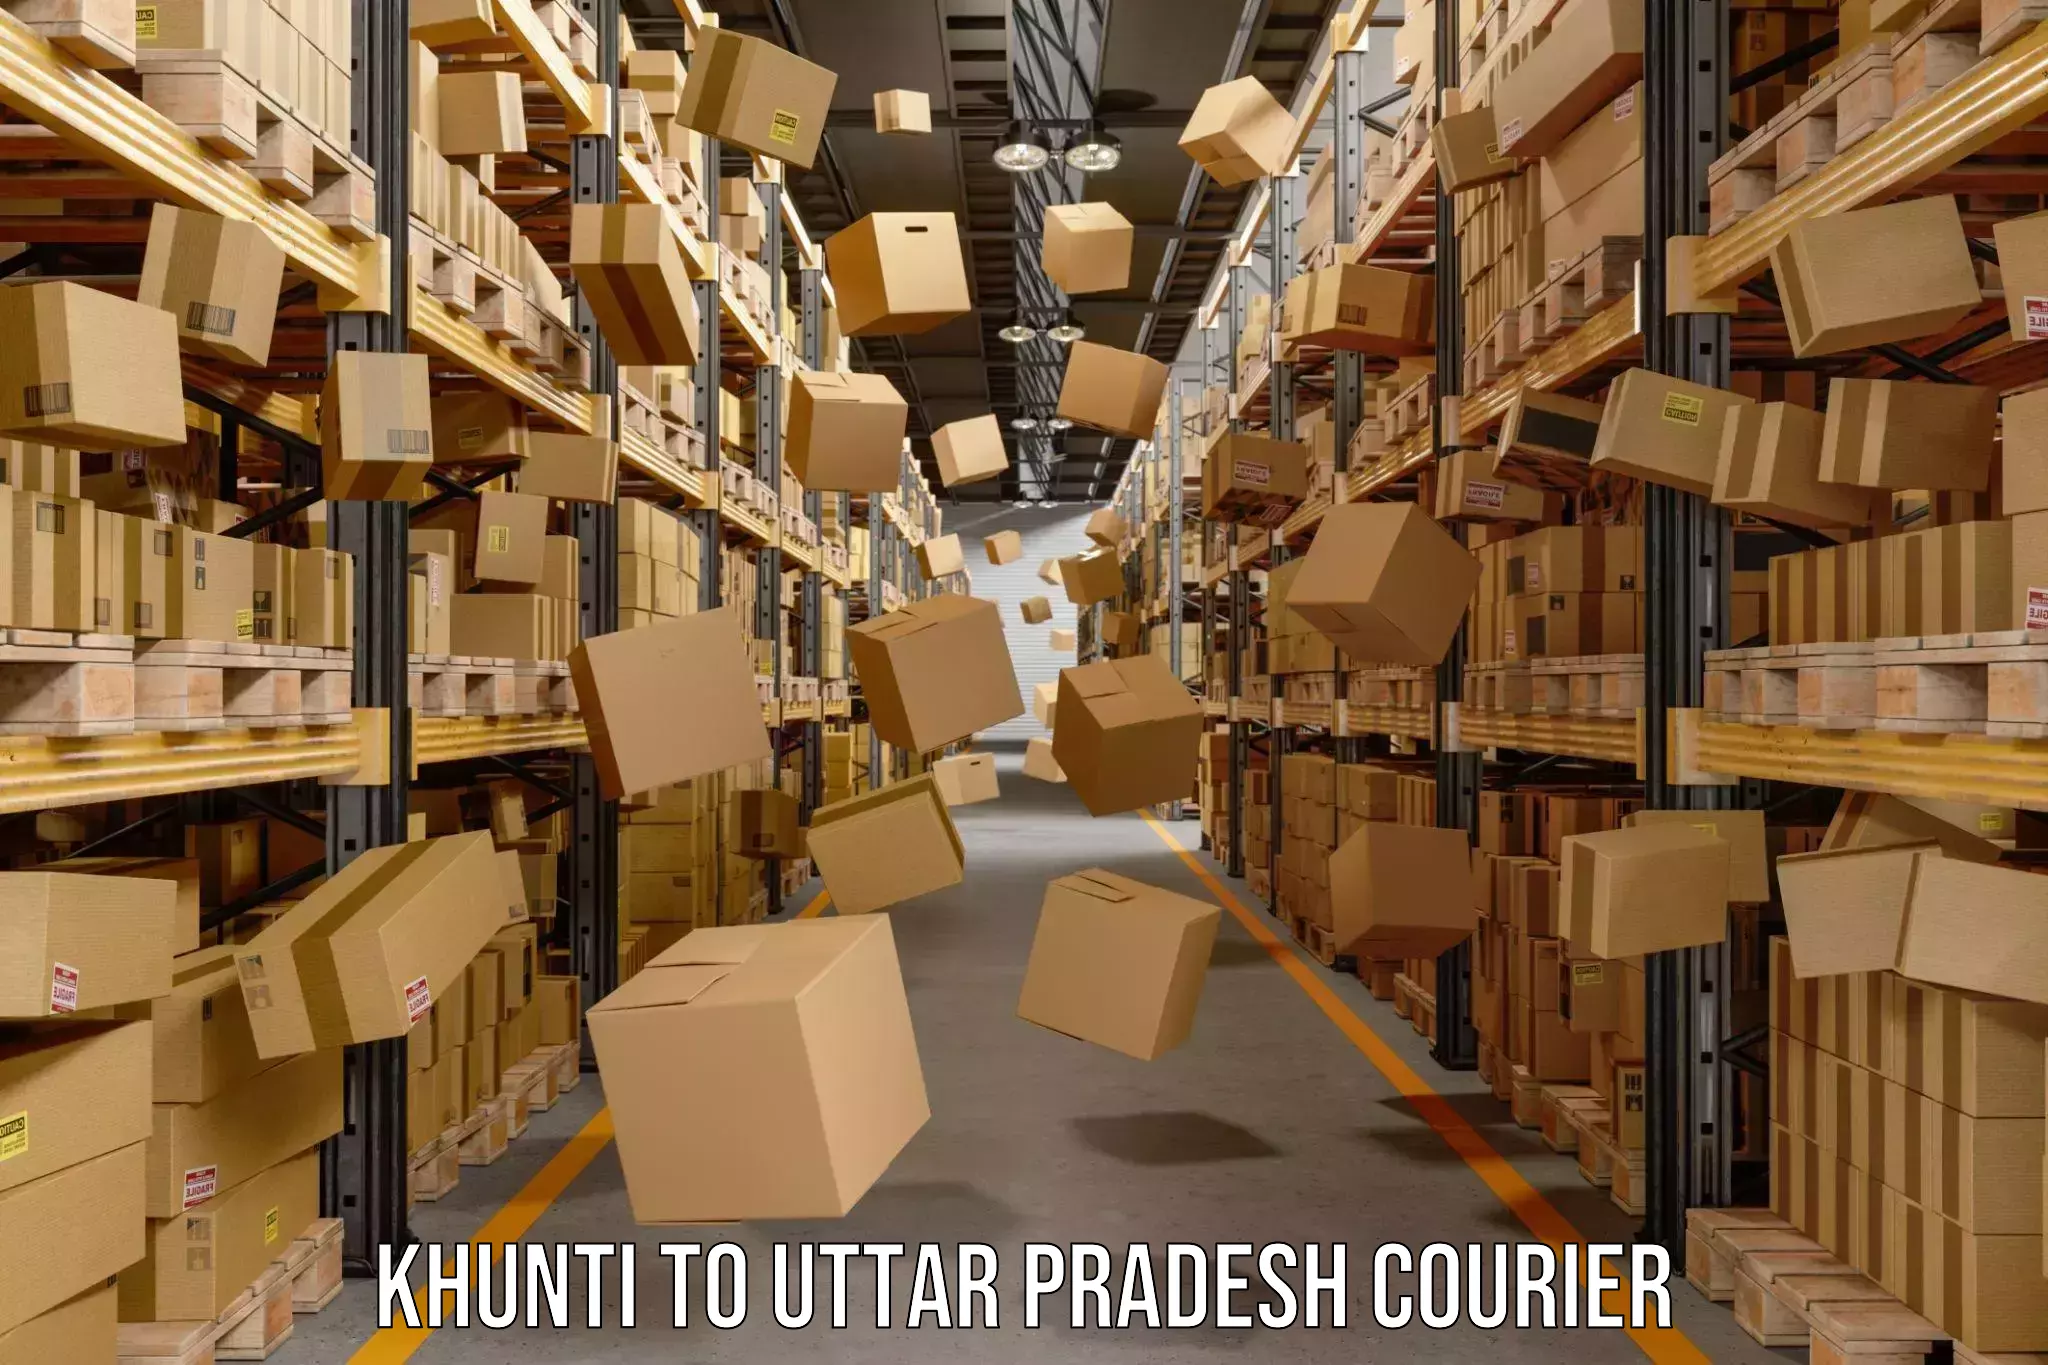 Courier service comparison Khunti to Jewar